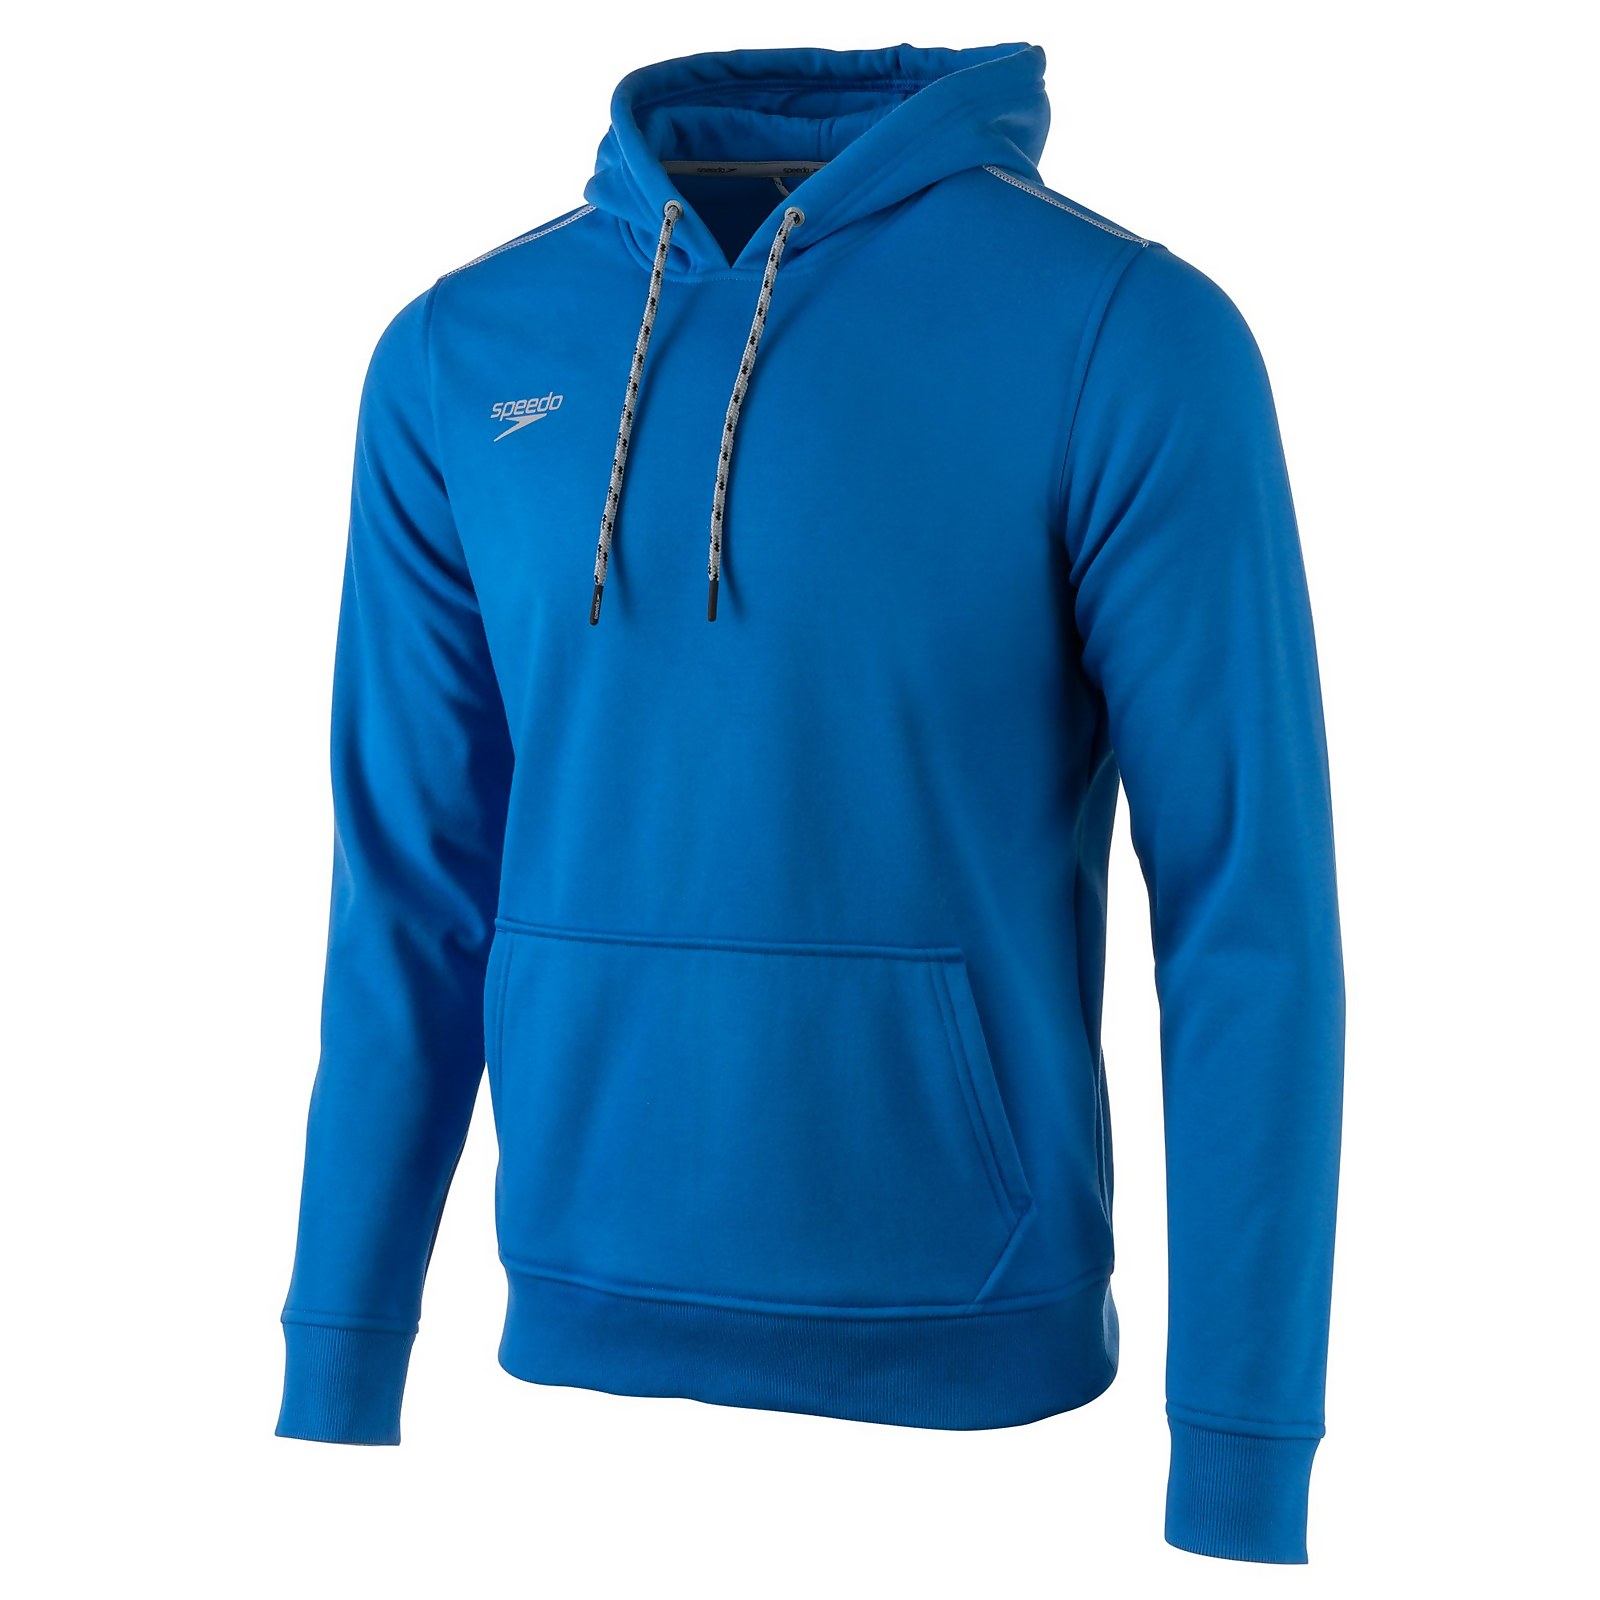 Speedo  Long Sleeve Hooded Sweatshirt - L    : Blue